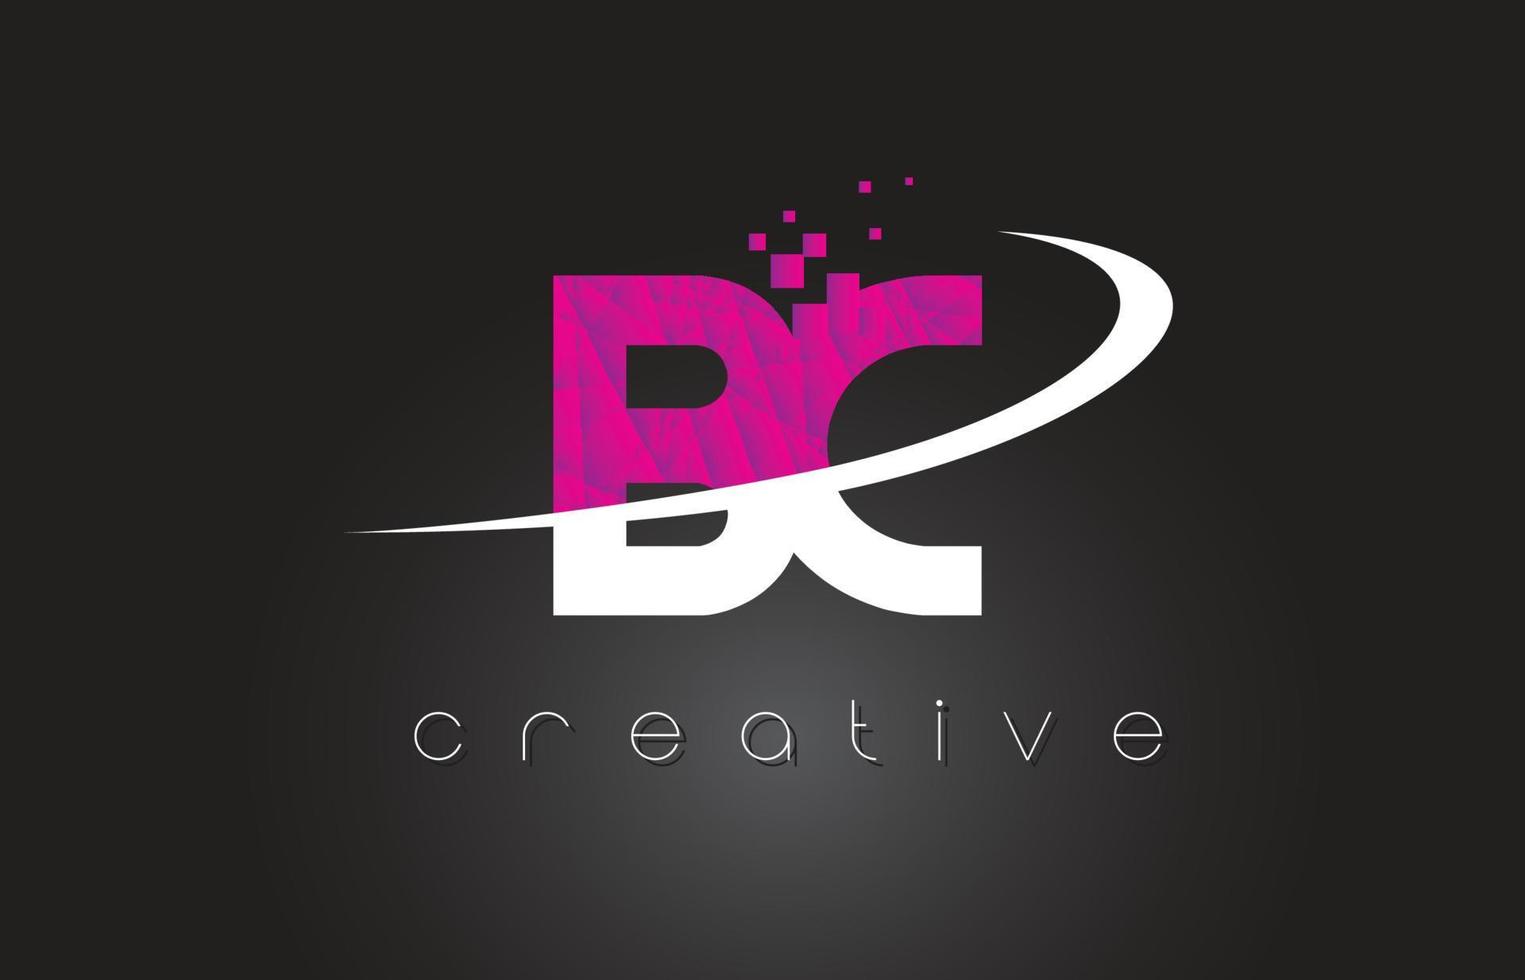 bc bc letras criativas design com cores rosa branco vetor